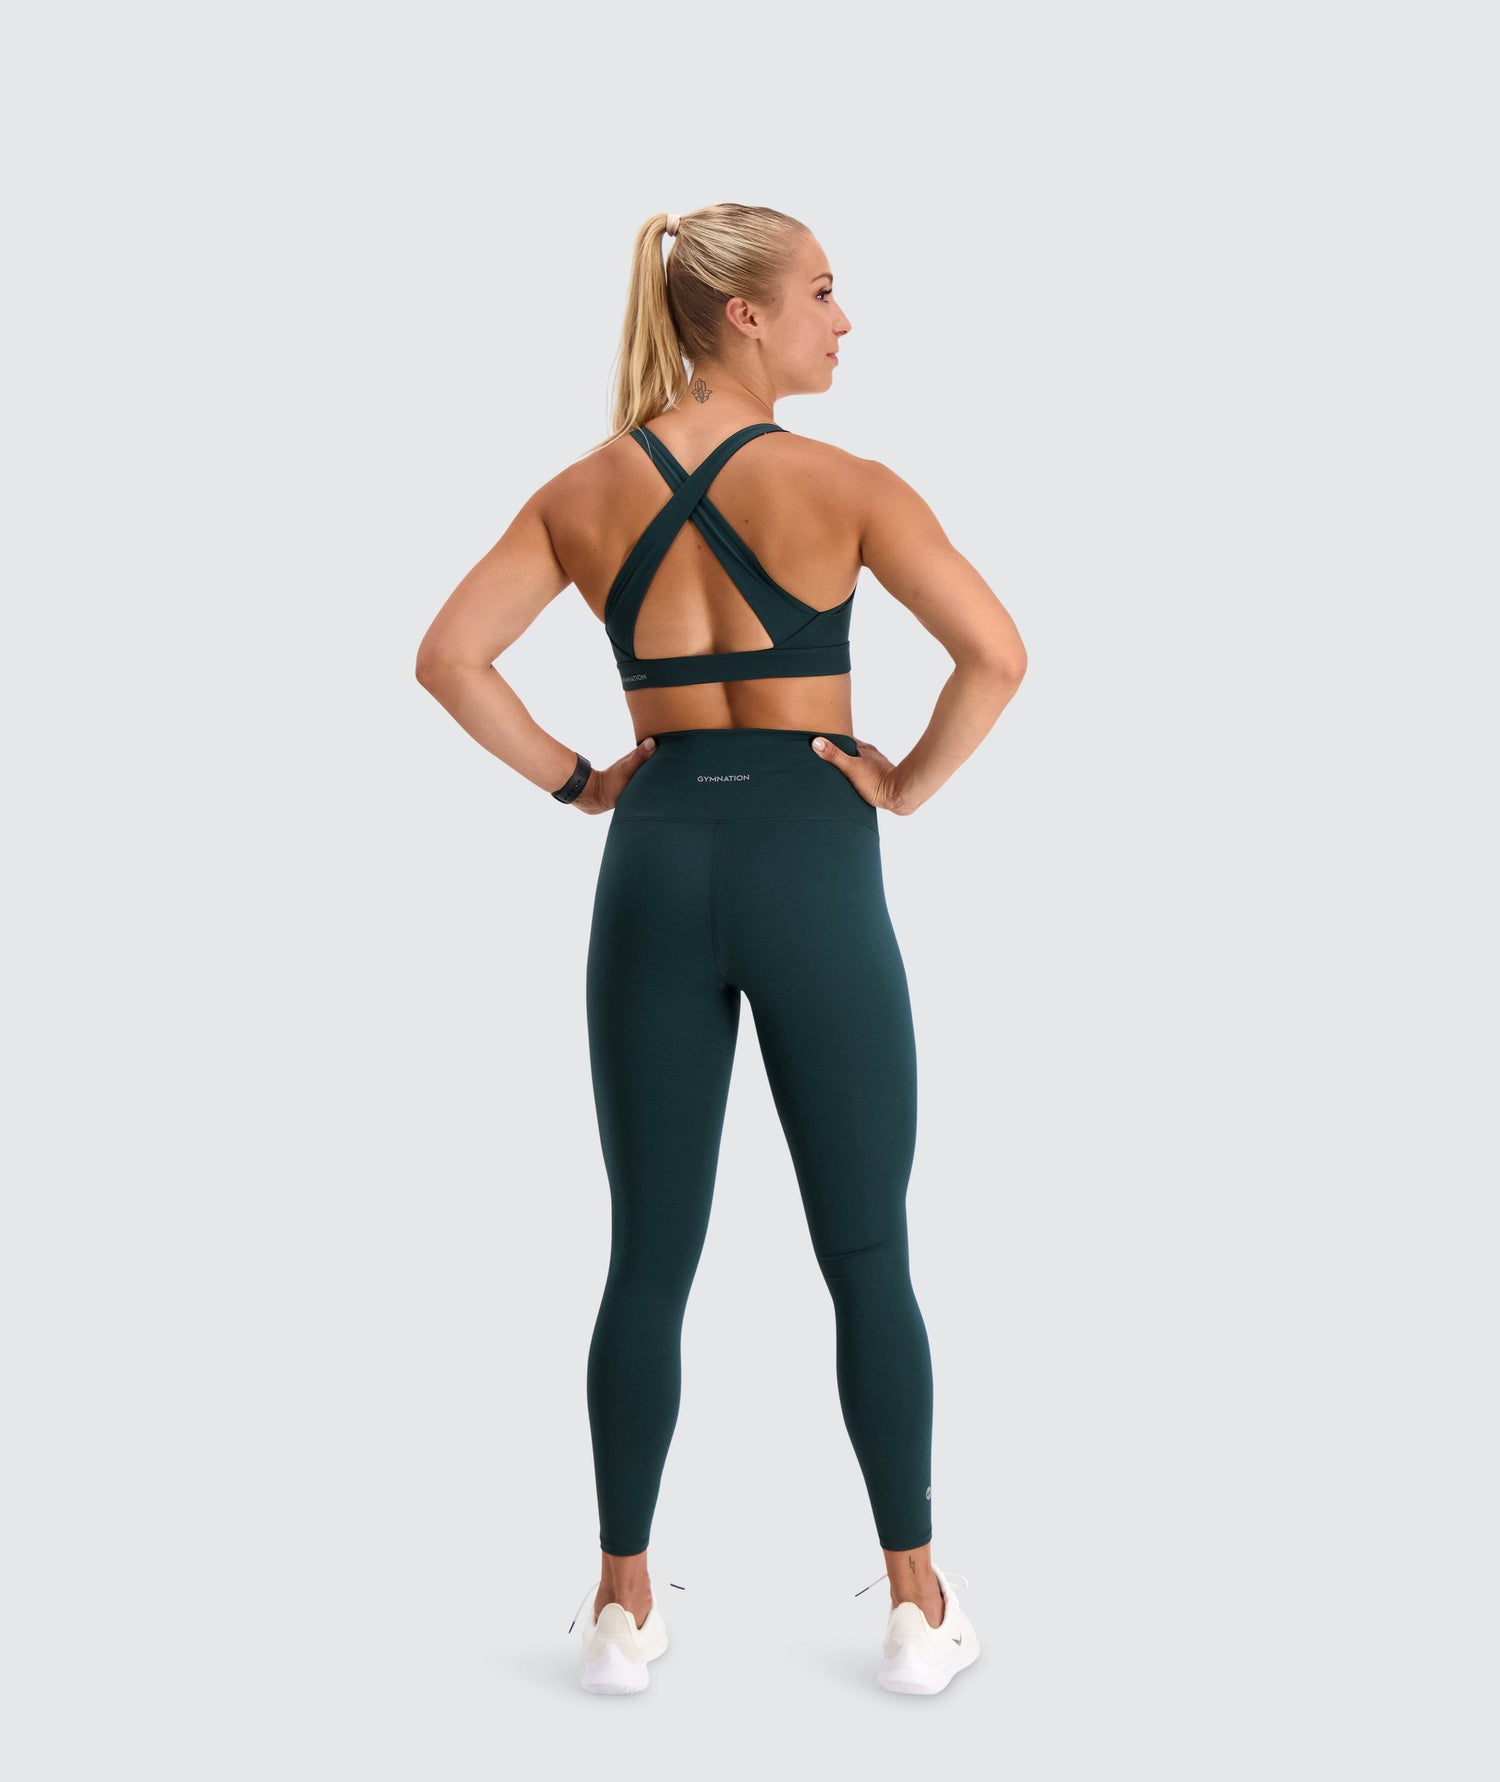 Gymnation W's Performance Boost Sports Bra - Bluesign®-certified production, Polyamide & Elastane Forest Green Underwear